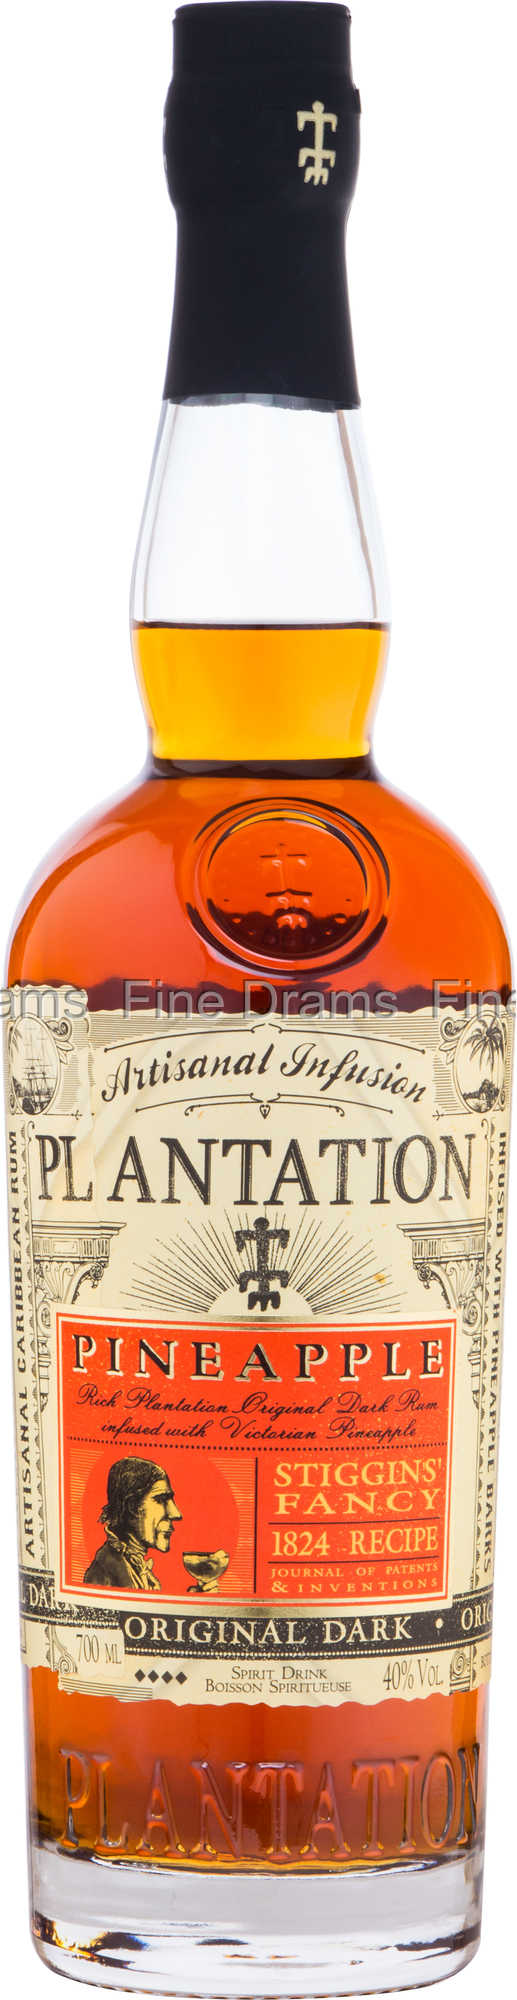 Fancy Pineapple Plantation Rum Stiggins\'